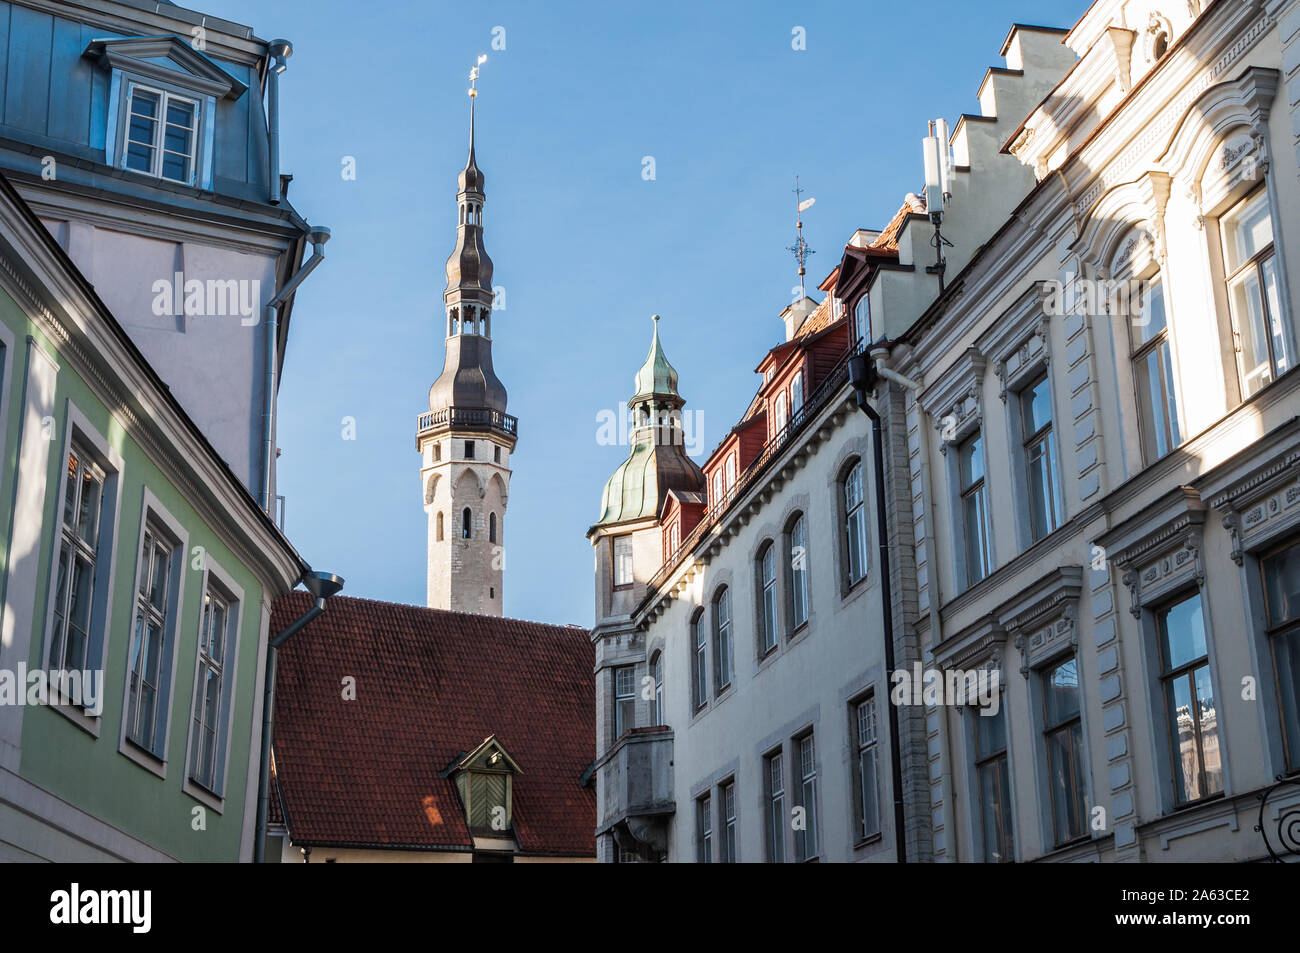 View of Tallinn old town with Town Hall, Estonia Stock Photo